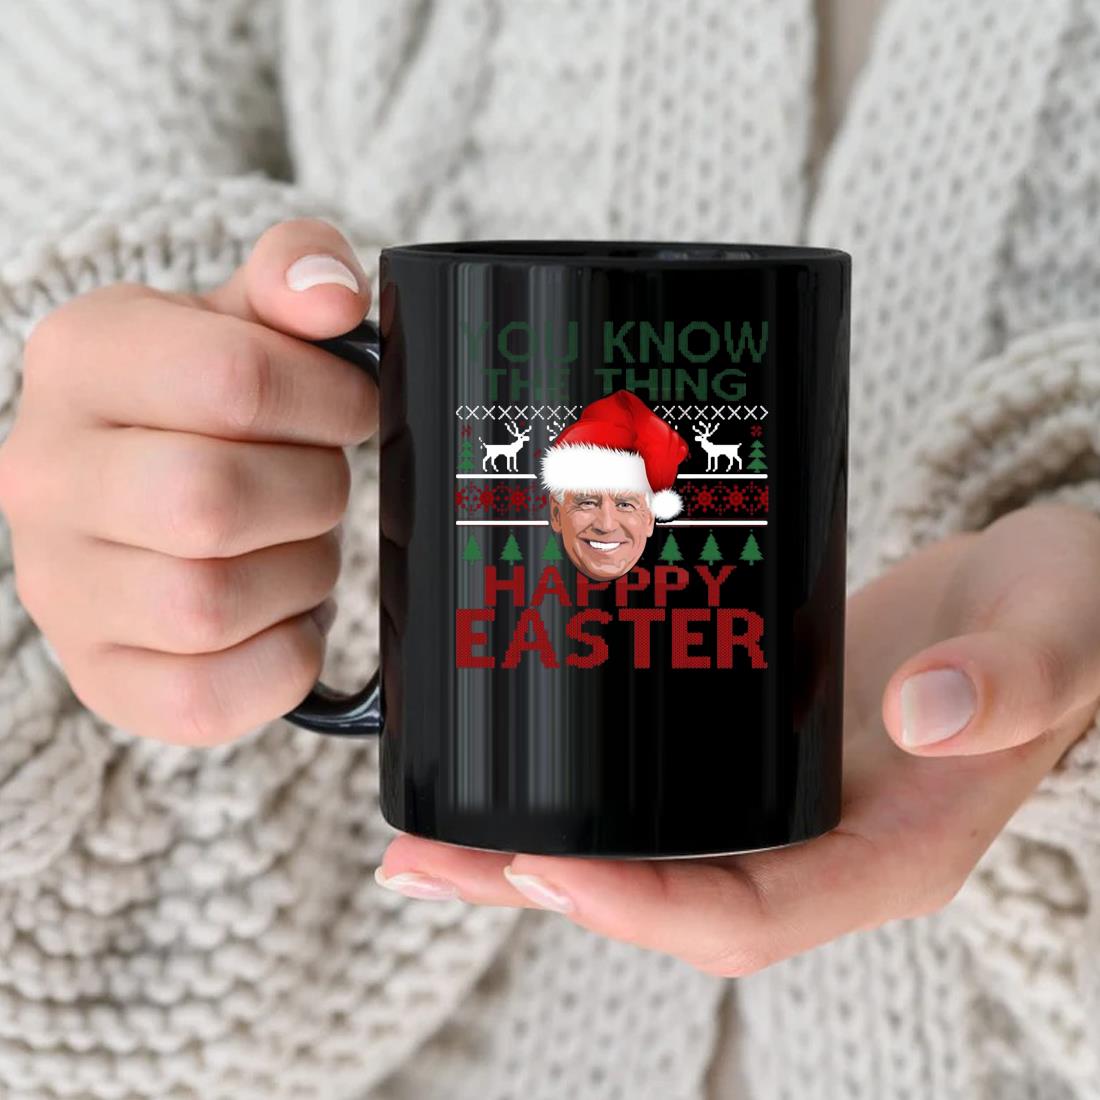 You Know The Thing Happy Easter Santa Joe Biden Christmas Mug